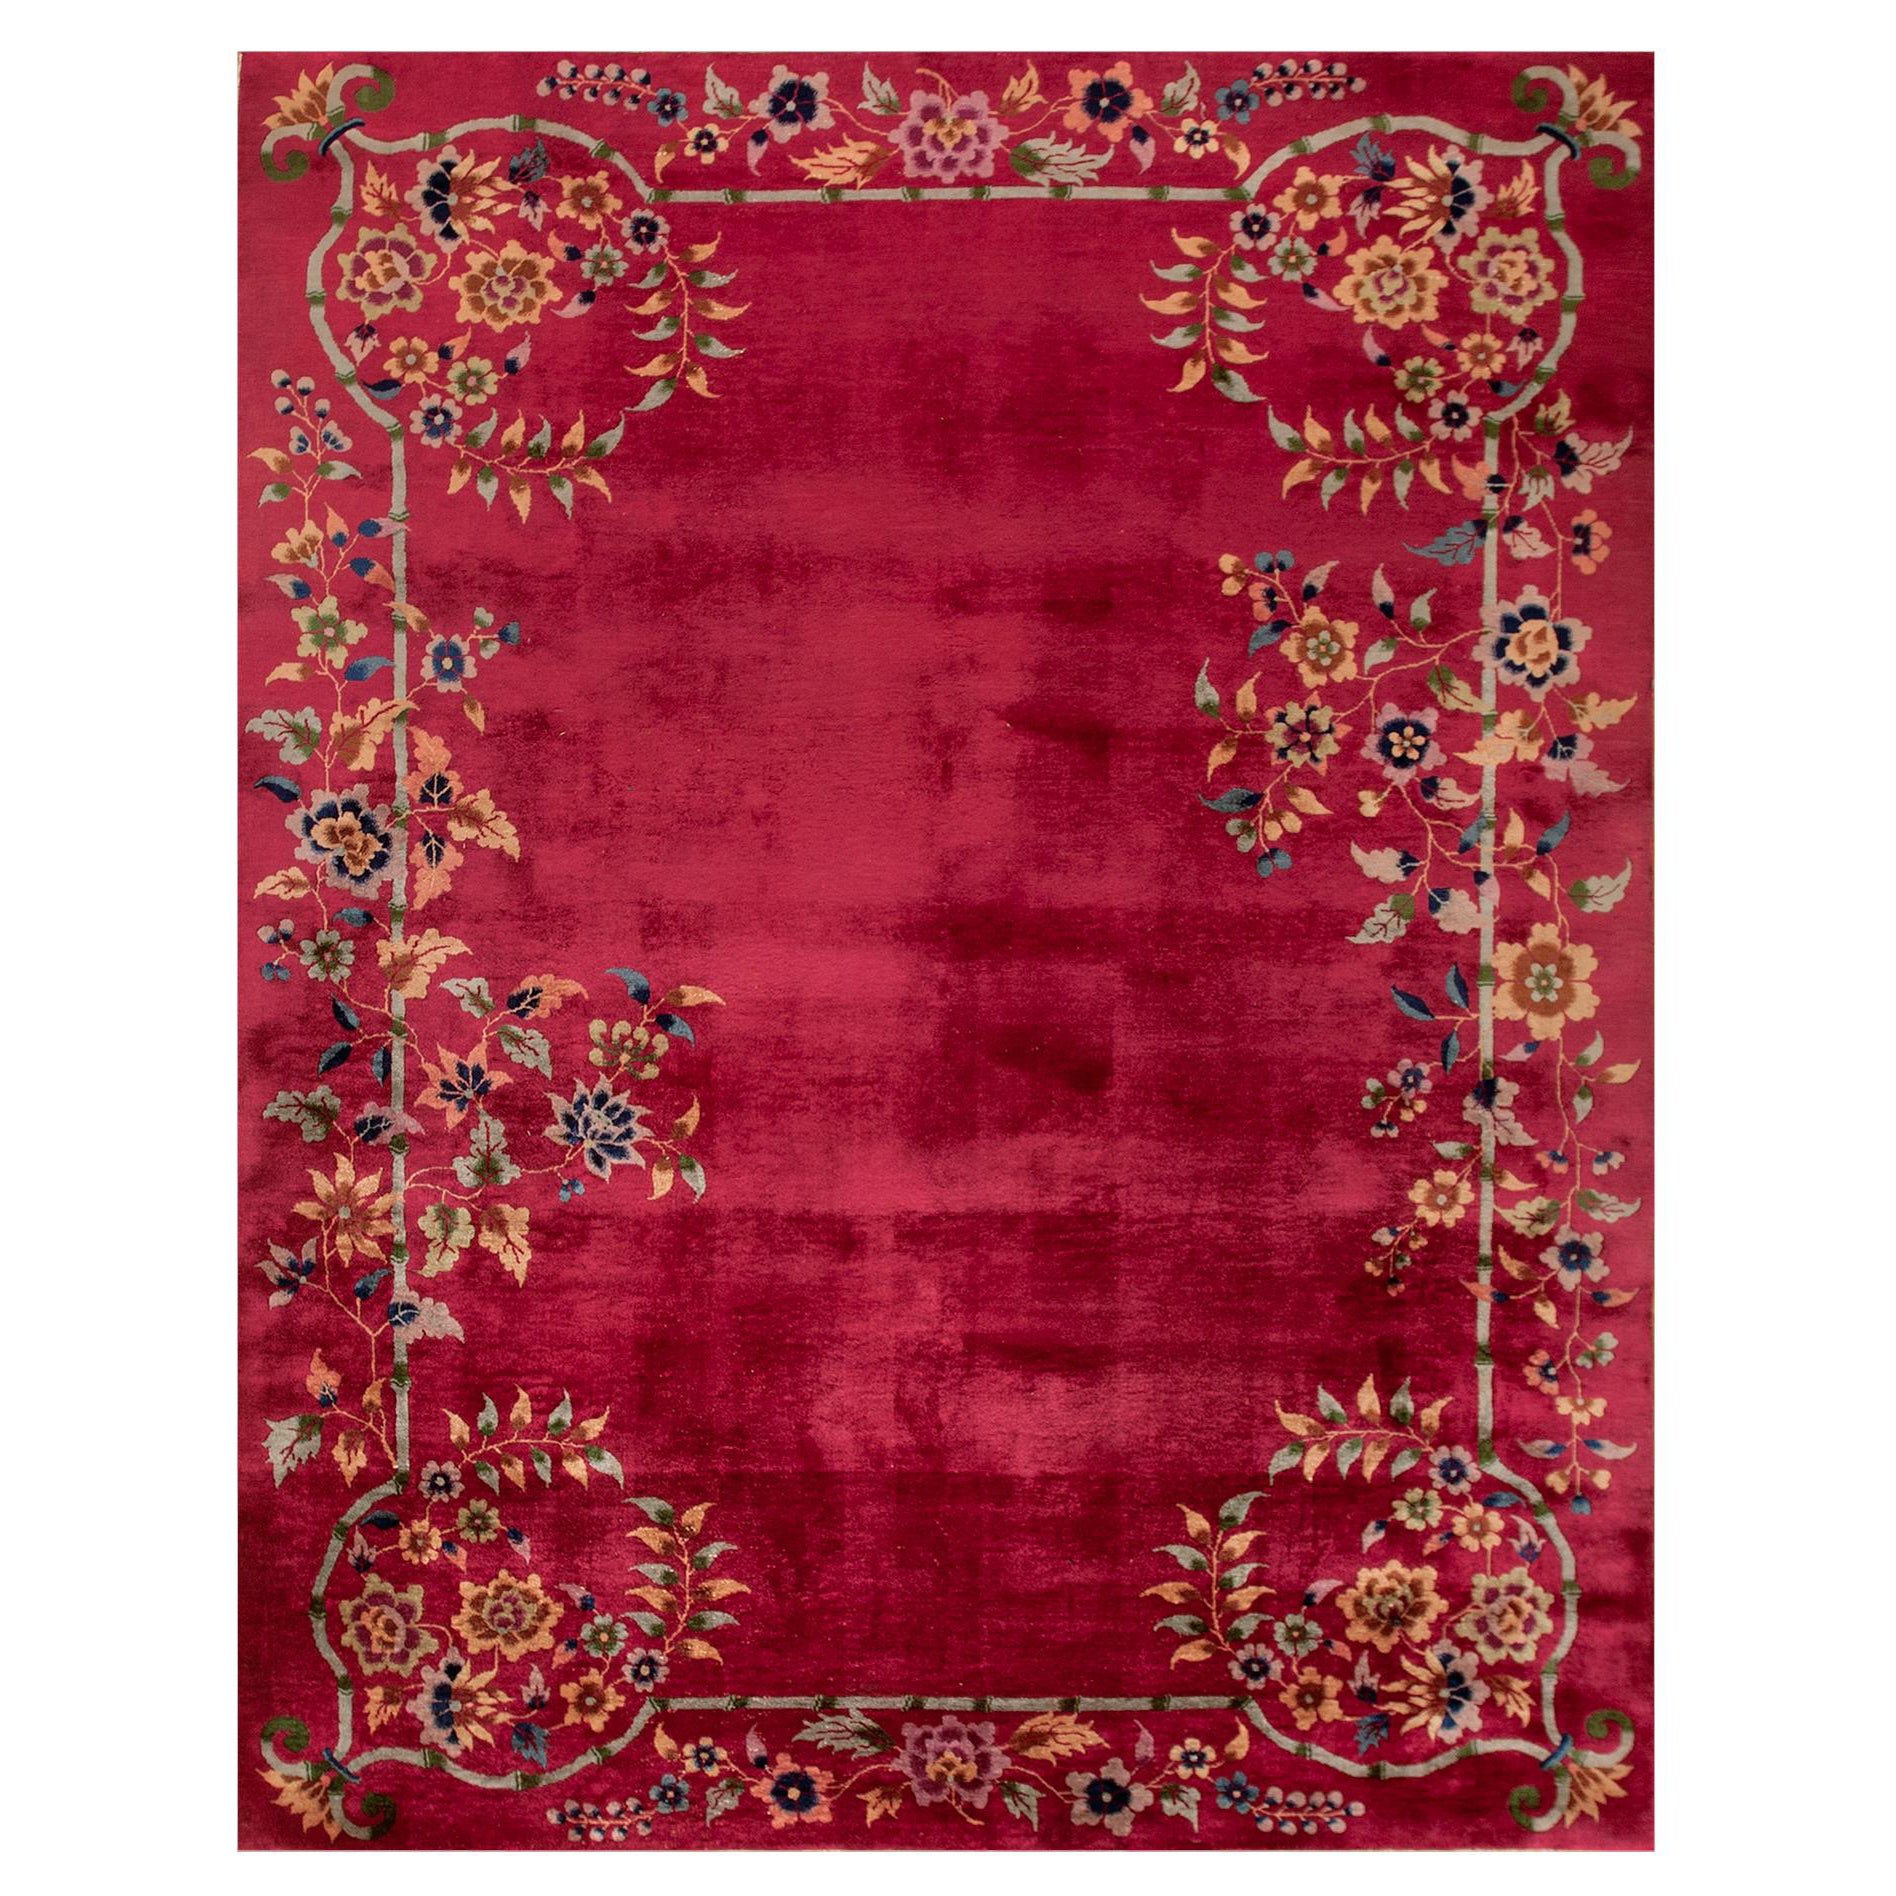 1920s Chinese Art Deco Carpet (9' x 11' 4" - 275 x 345 cm ) For Sale